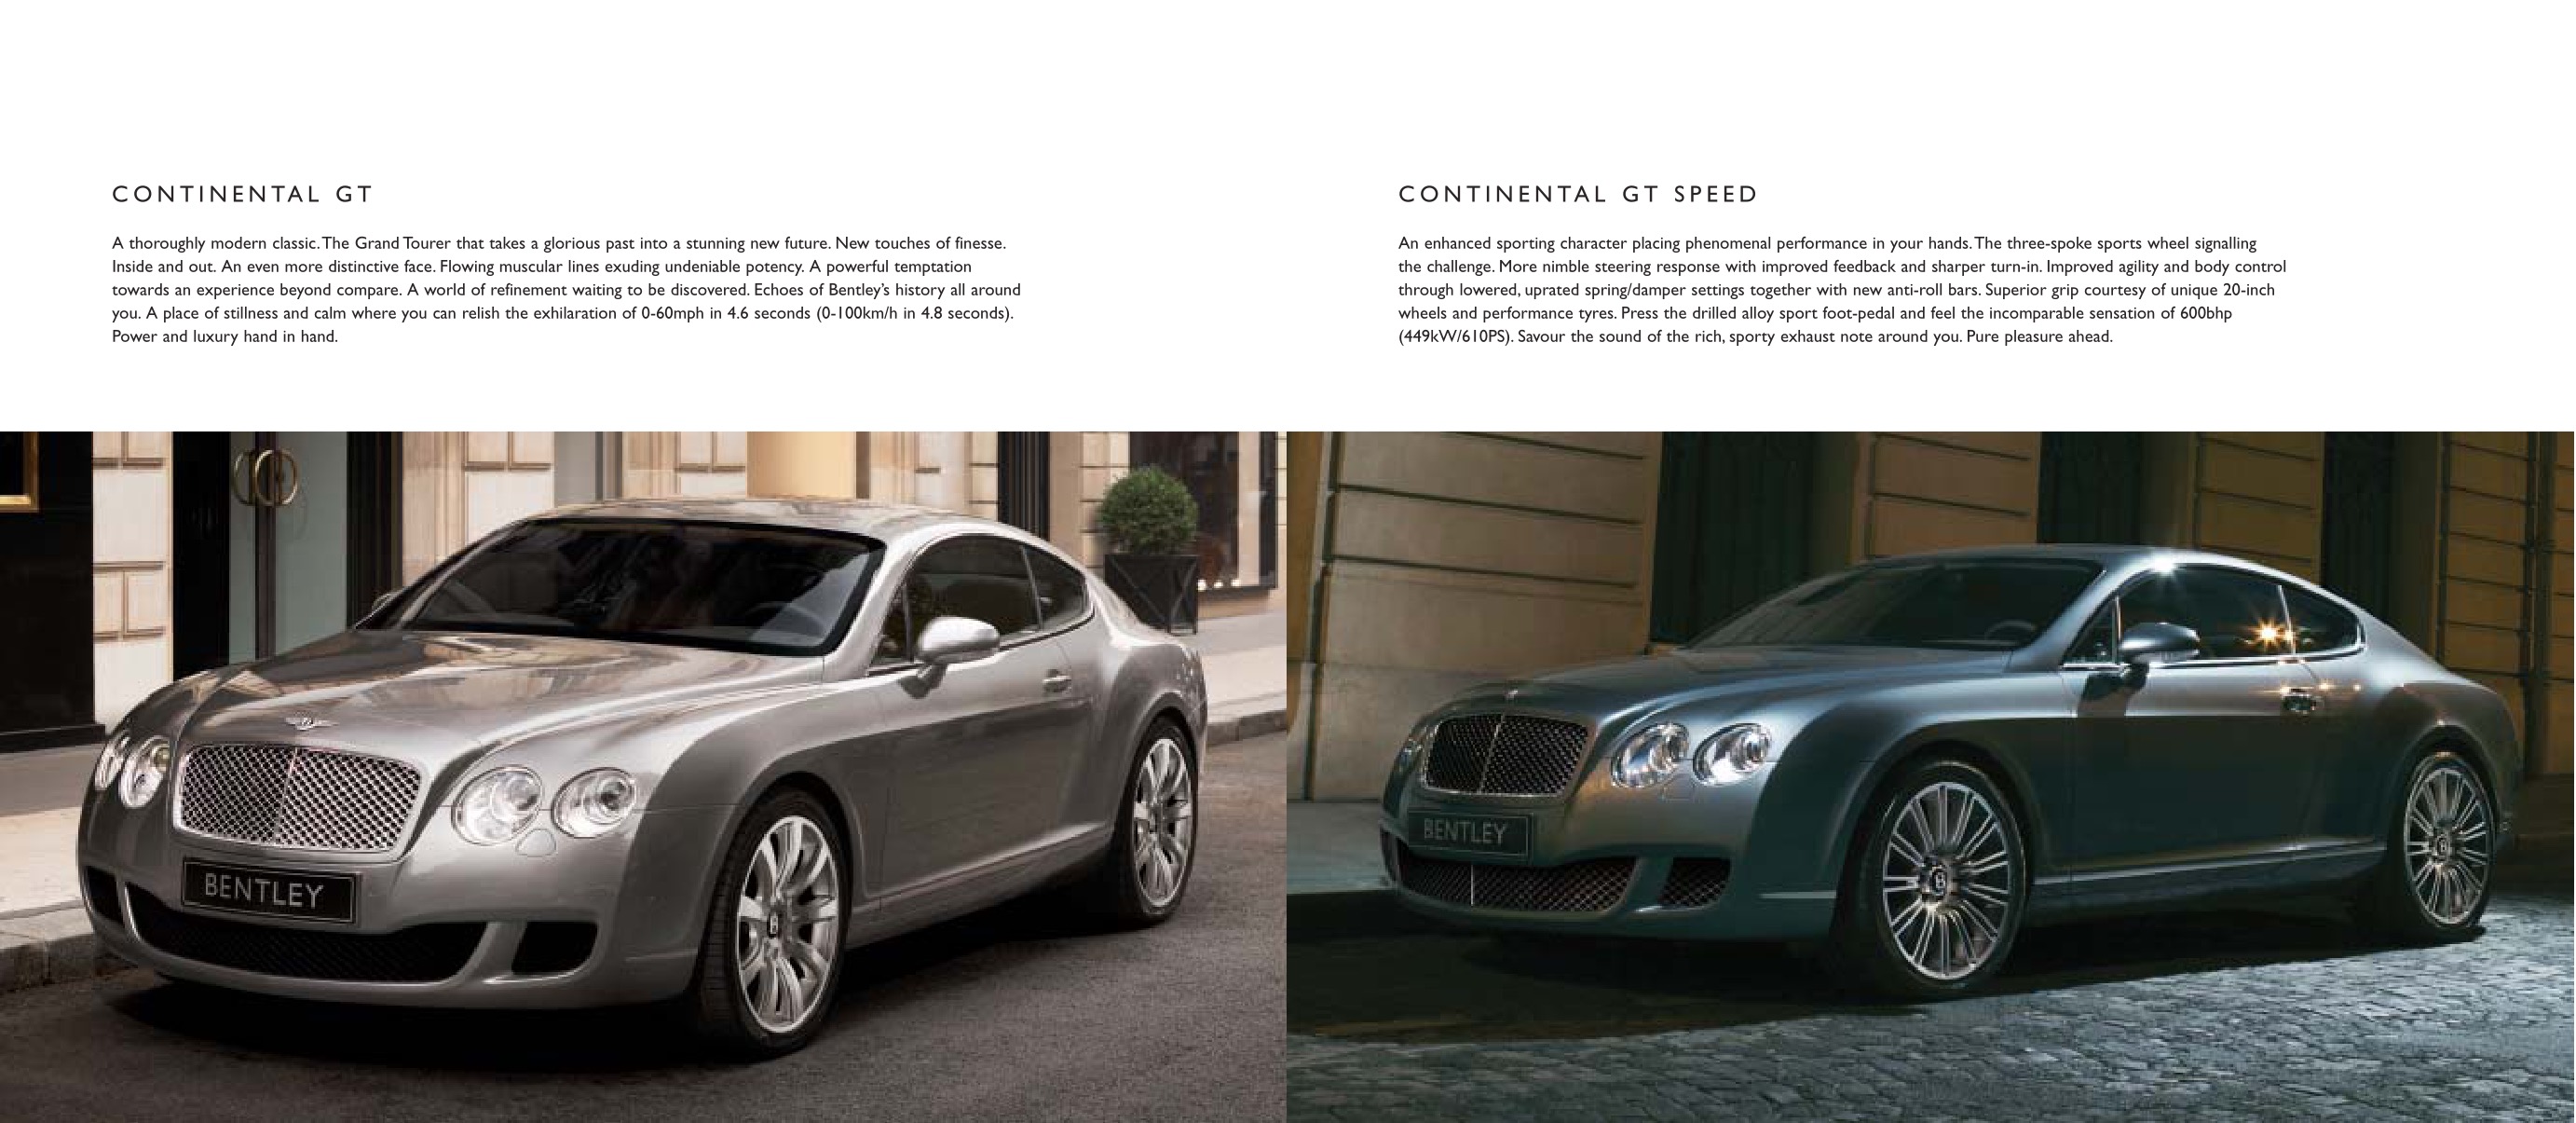 2008 Bentley Continental GT Brochure Page 2